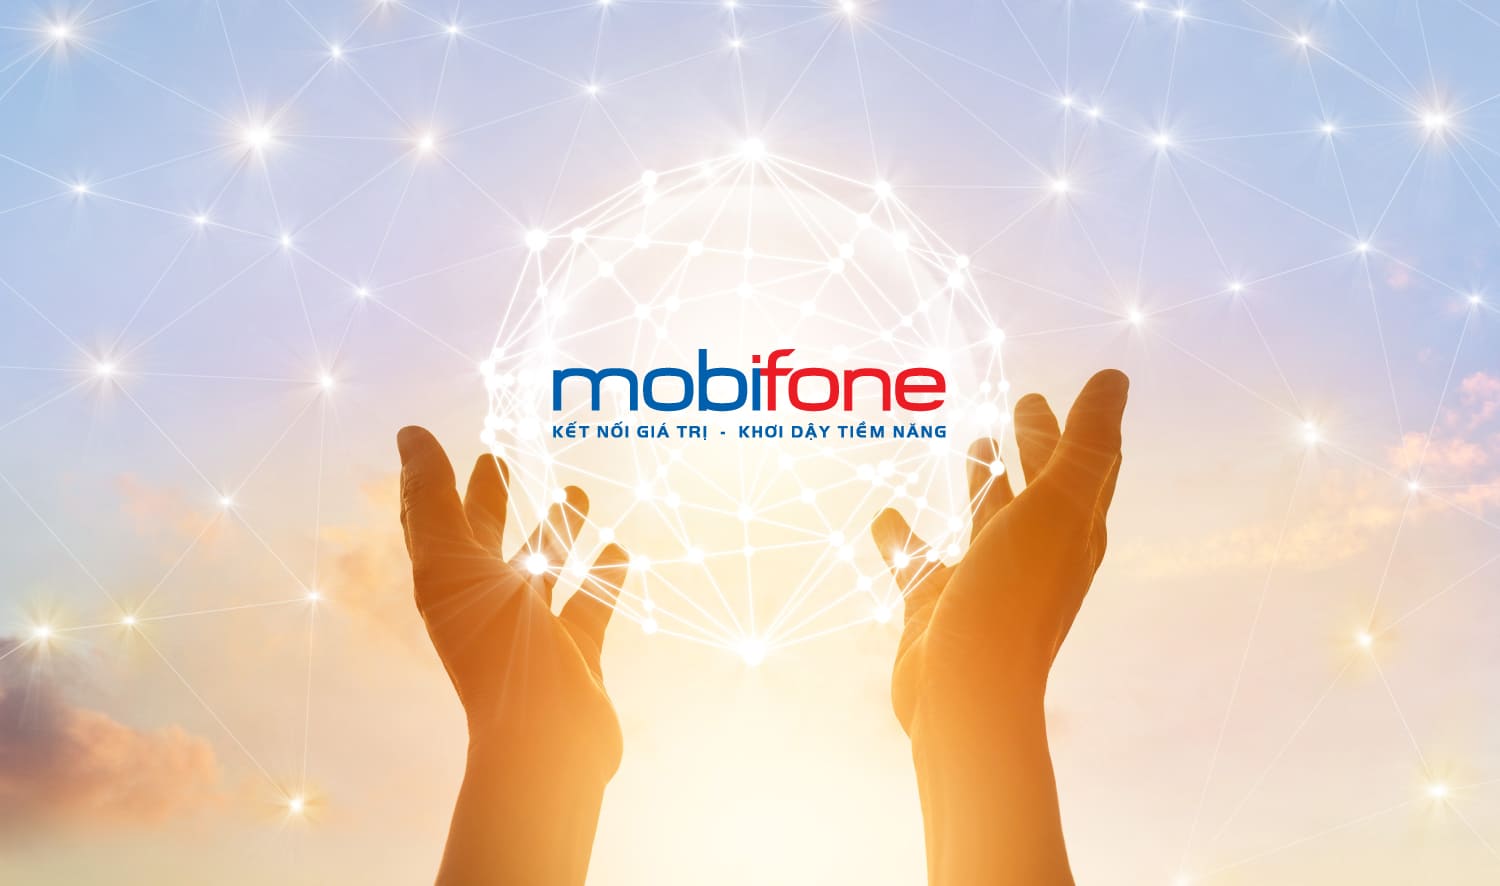 Thiet ke profile Mobifone 2019 08